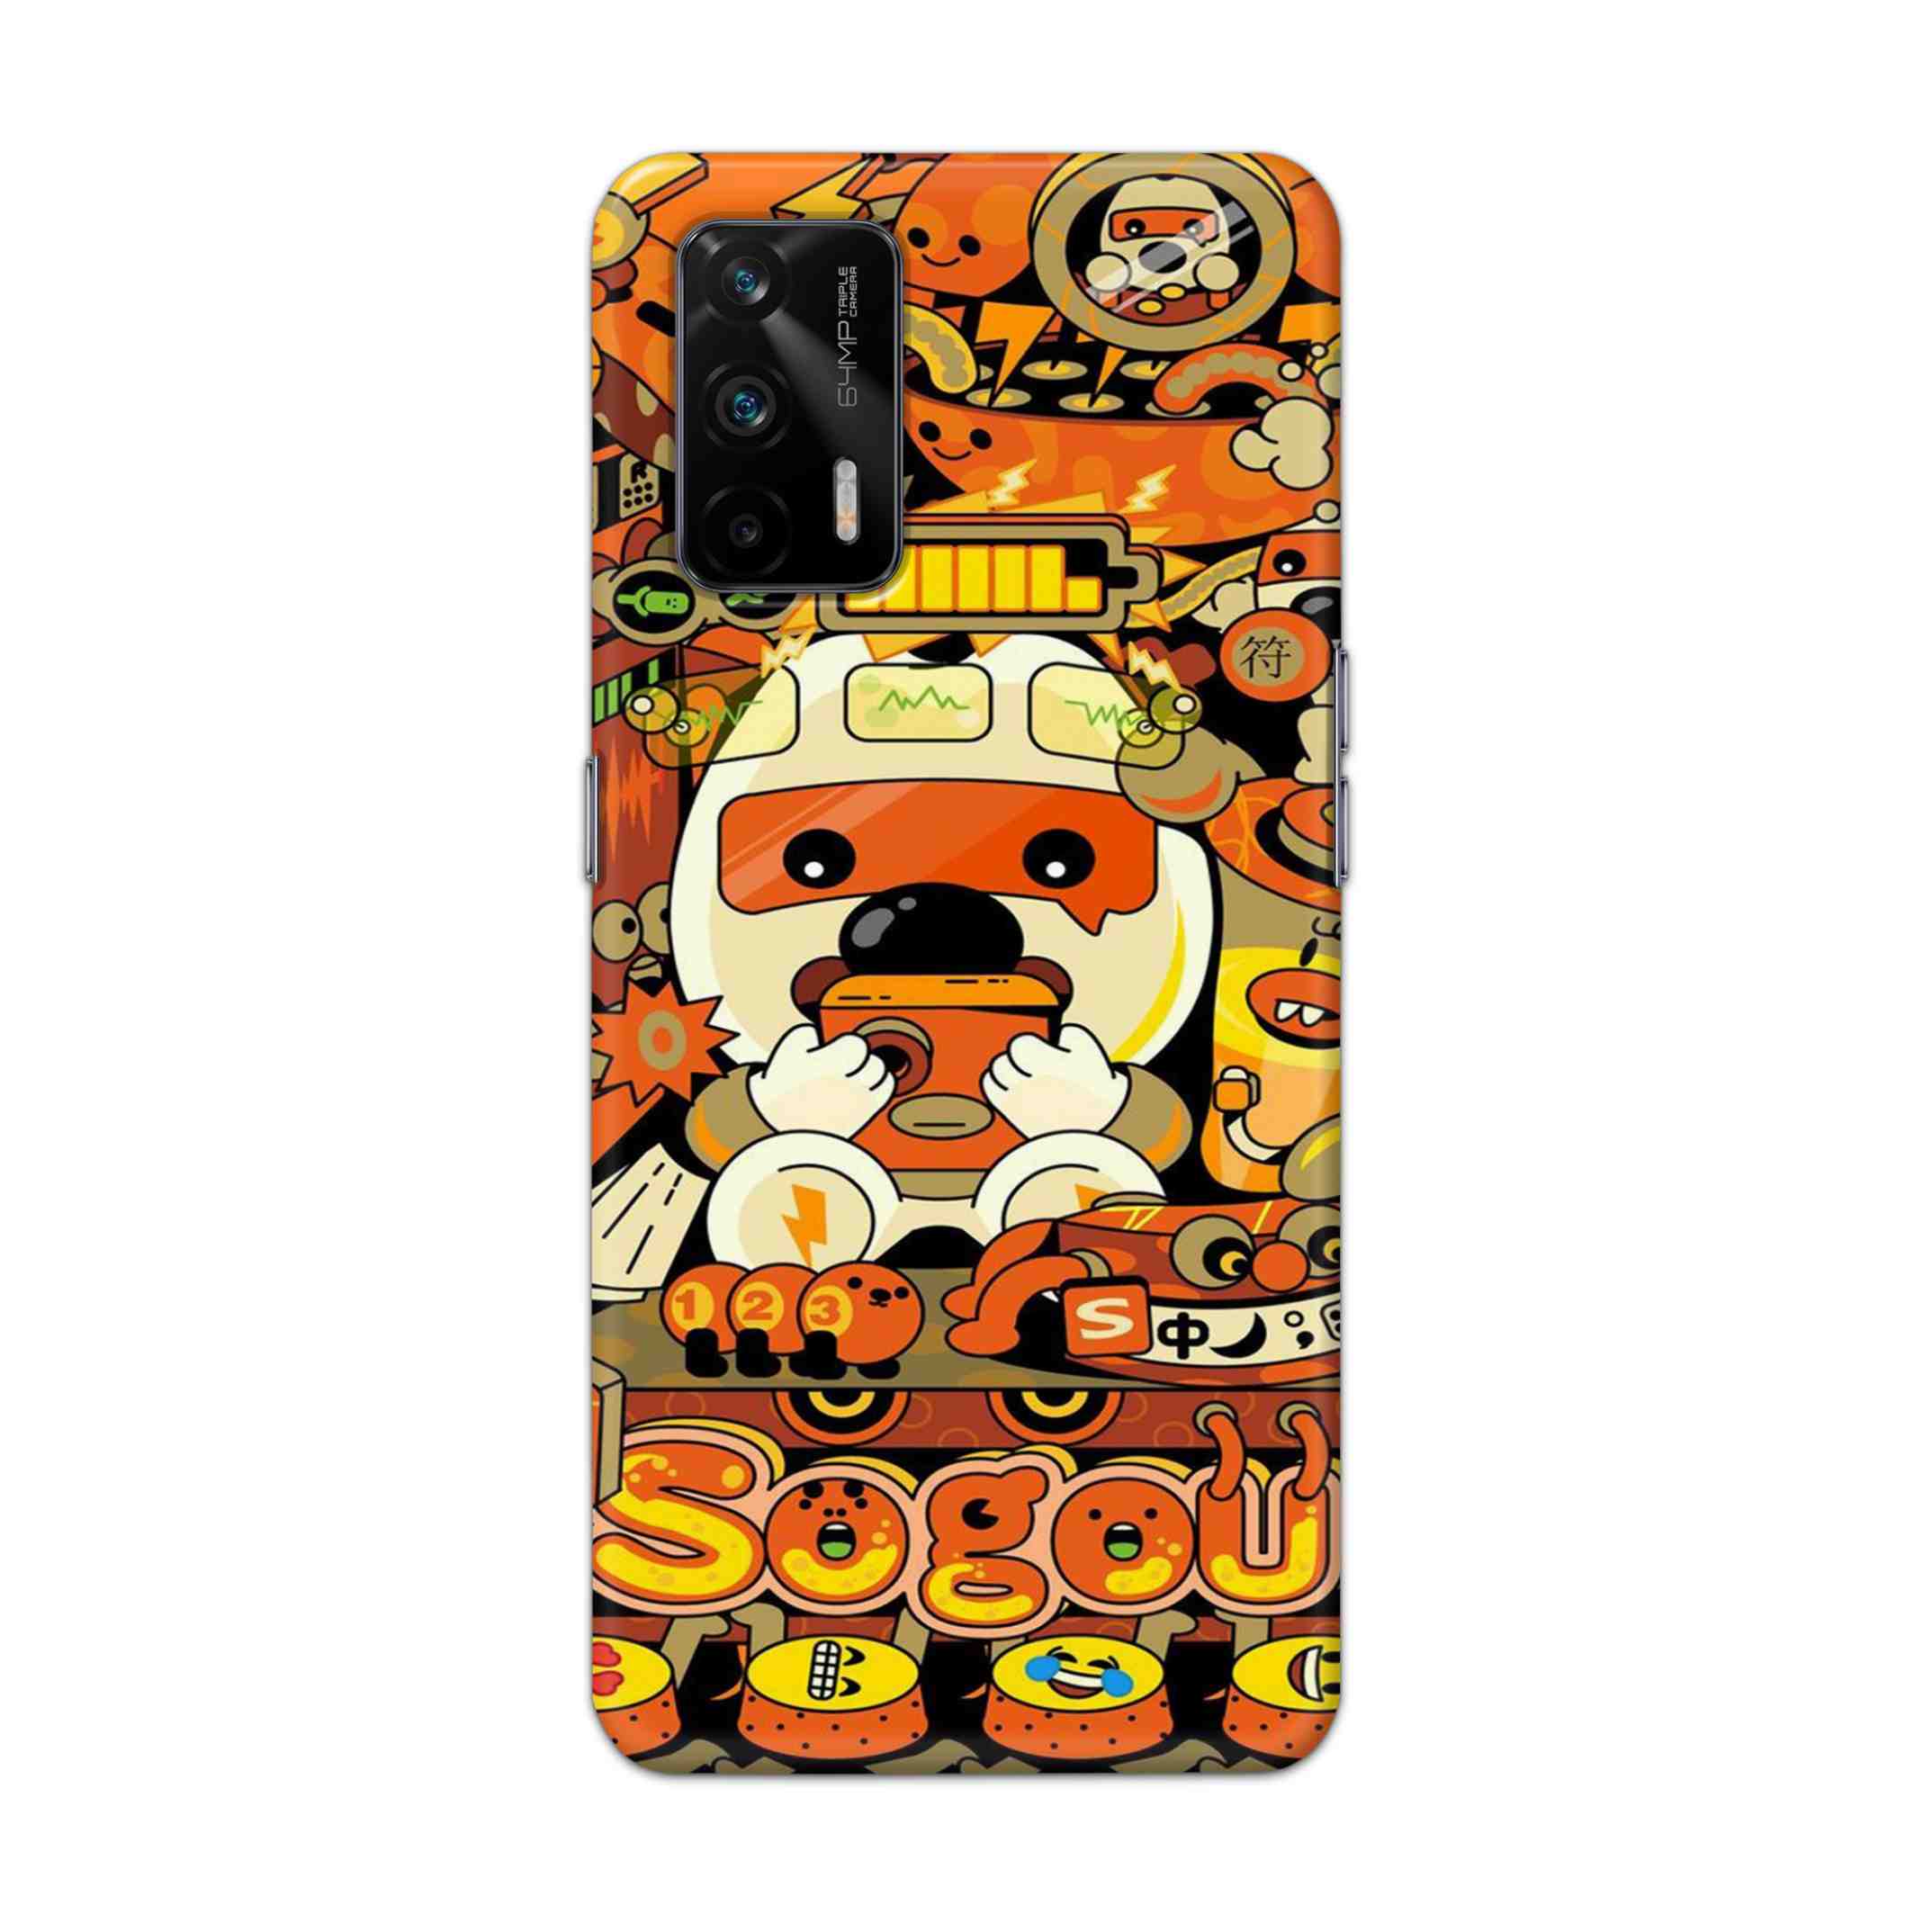 Buy Sogou Hard Back Mobile Phone Case Cover For Realme X7 Max Online